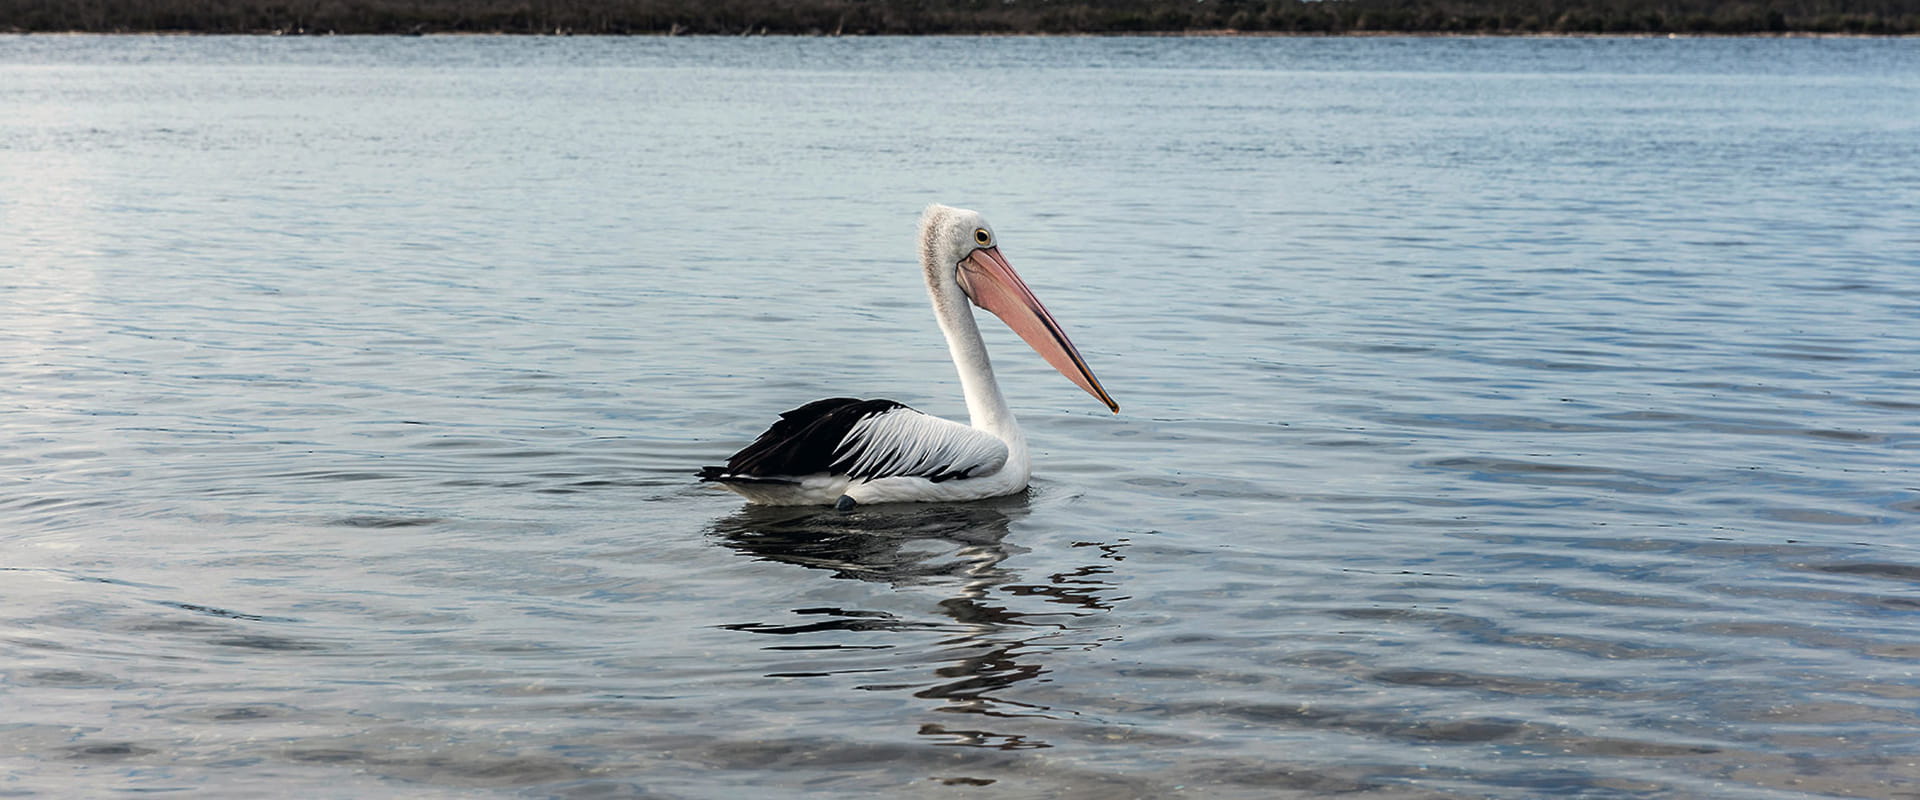 A pelican floats across the lakes